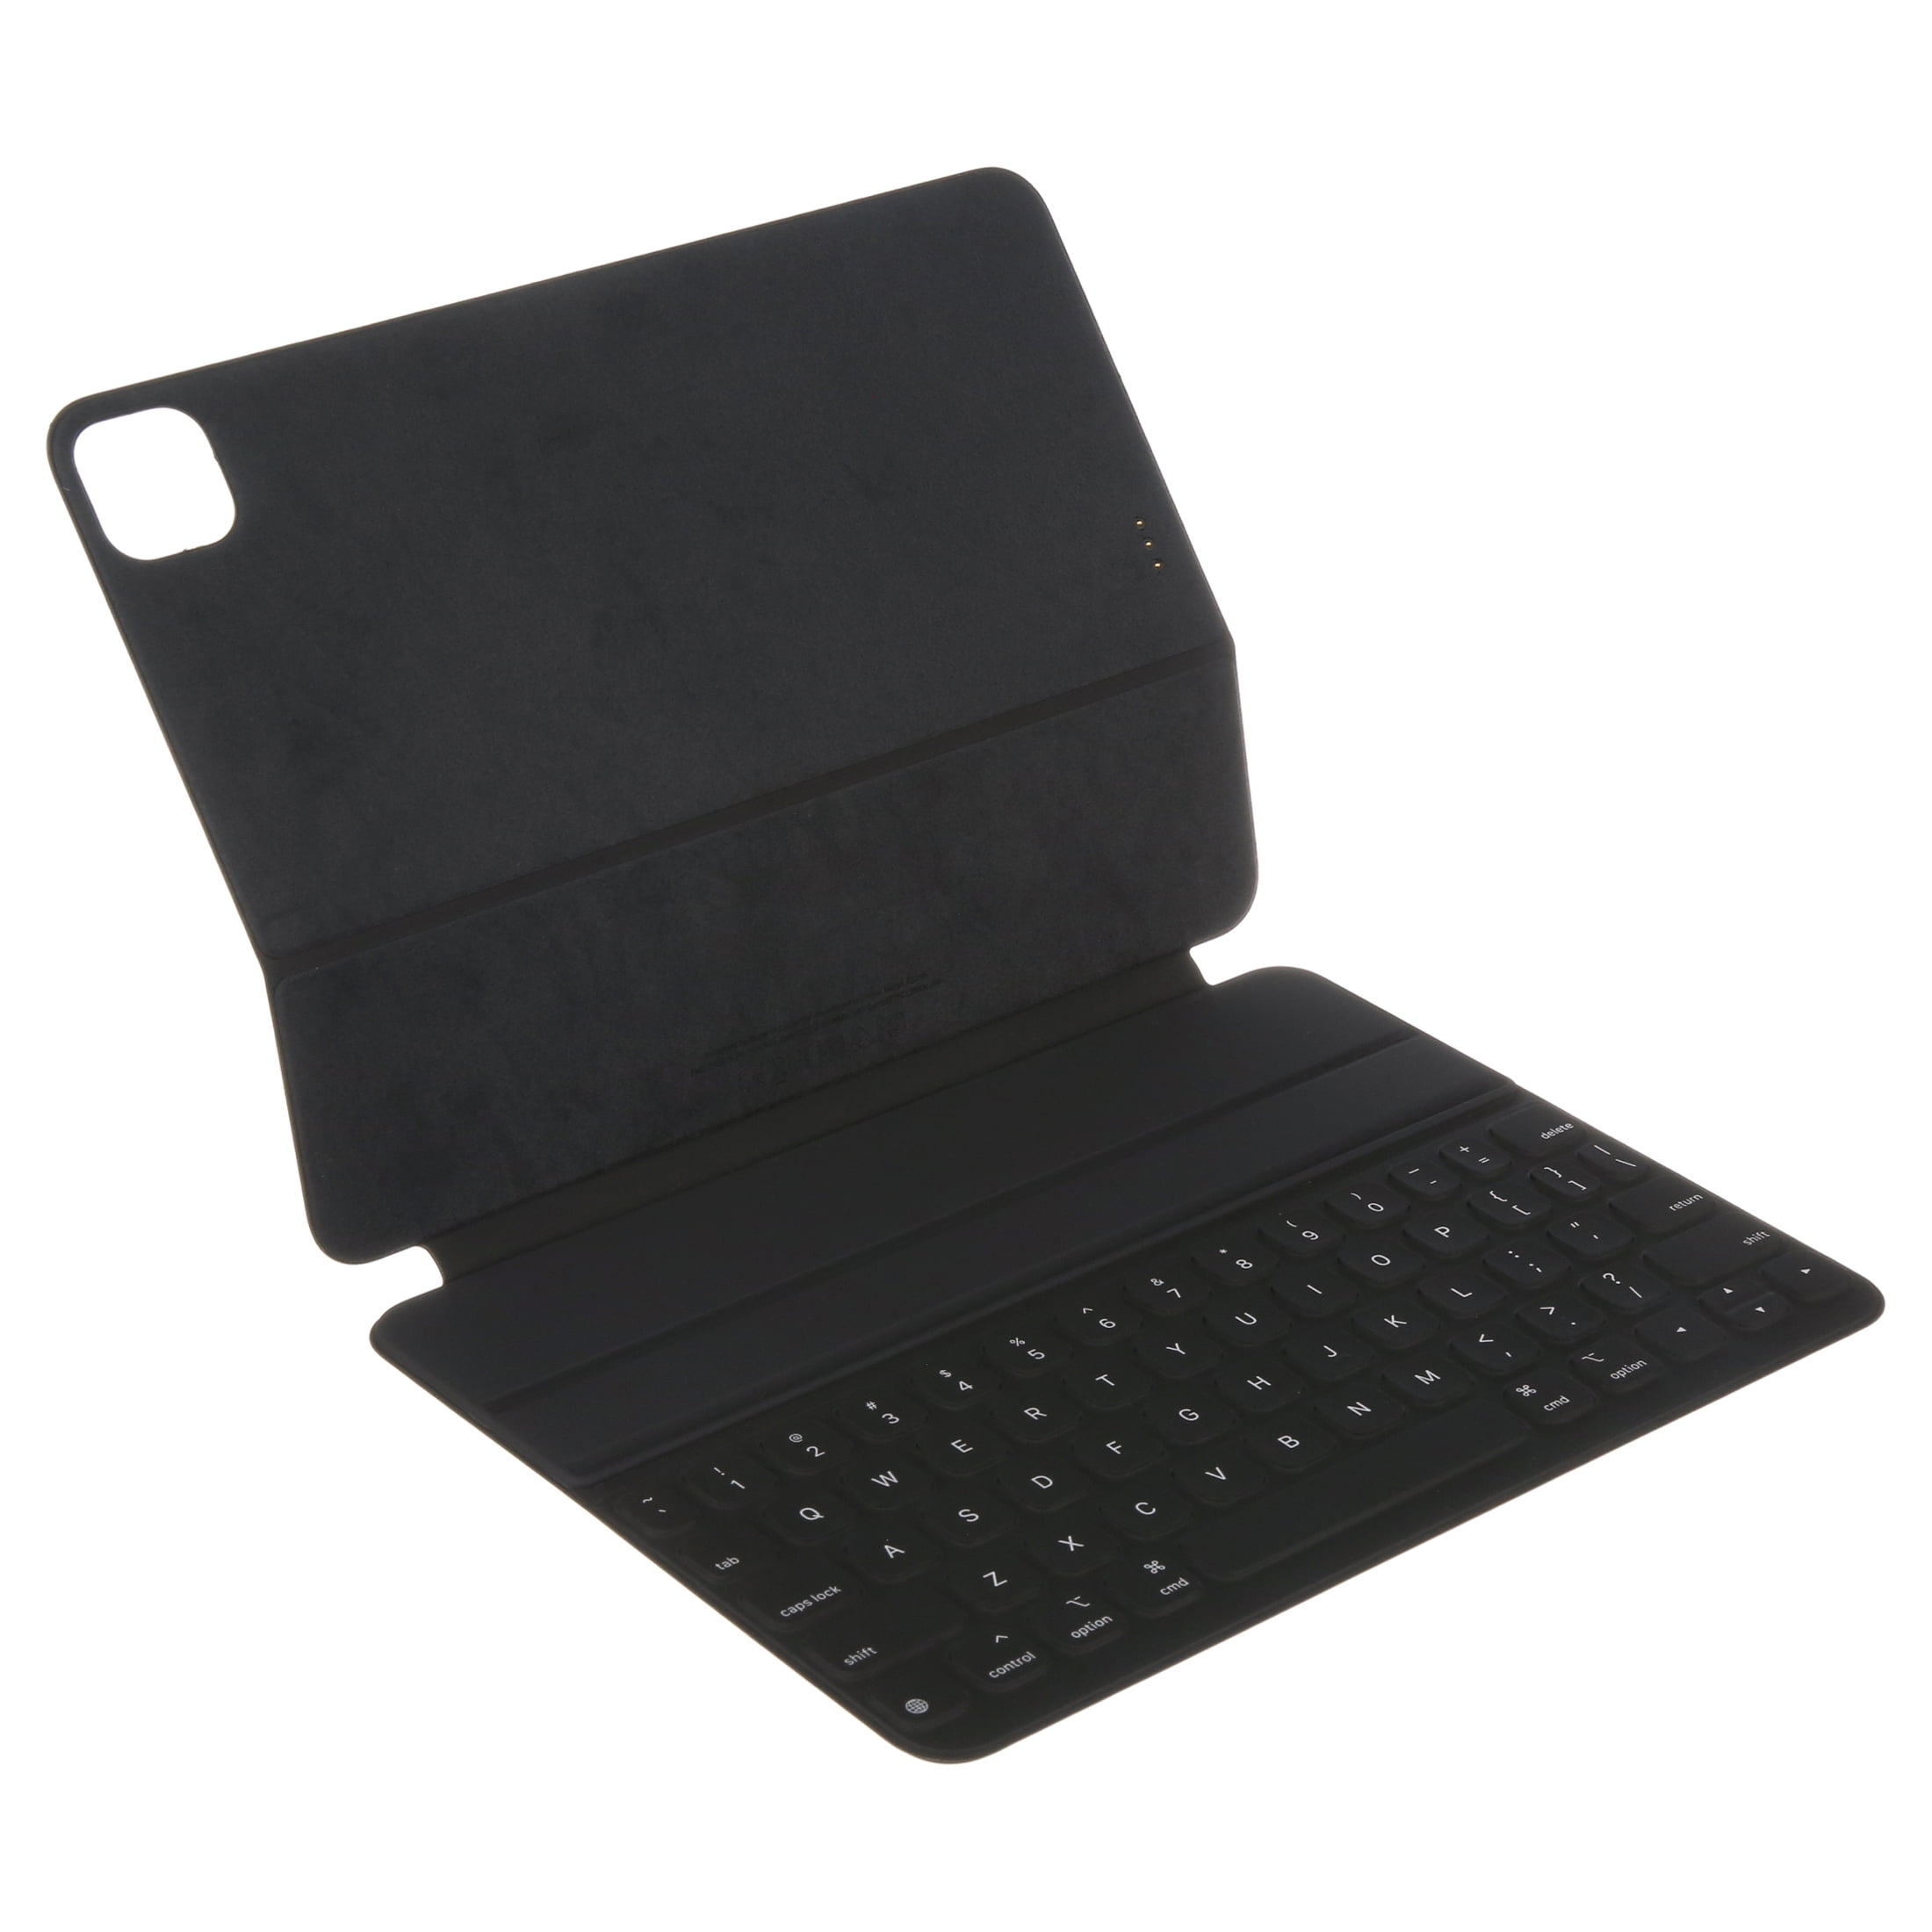 Smart Keyboard Folio for iPad Pro 11-inch (3rd generation) and iPad Air  (5th generation) - US English - Walmart.com